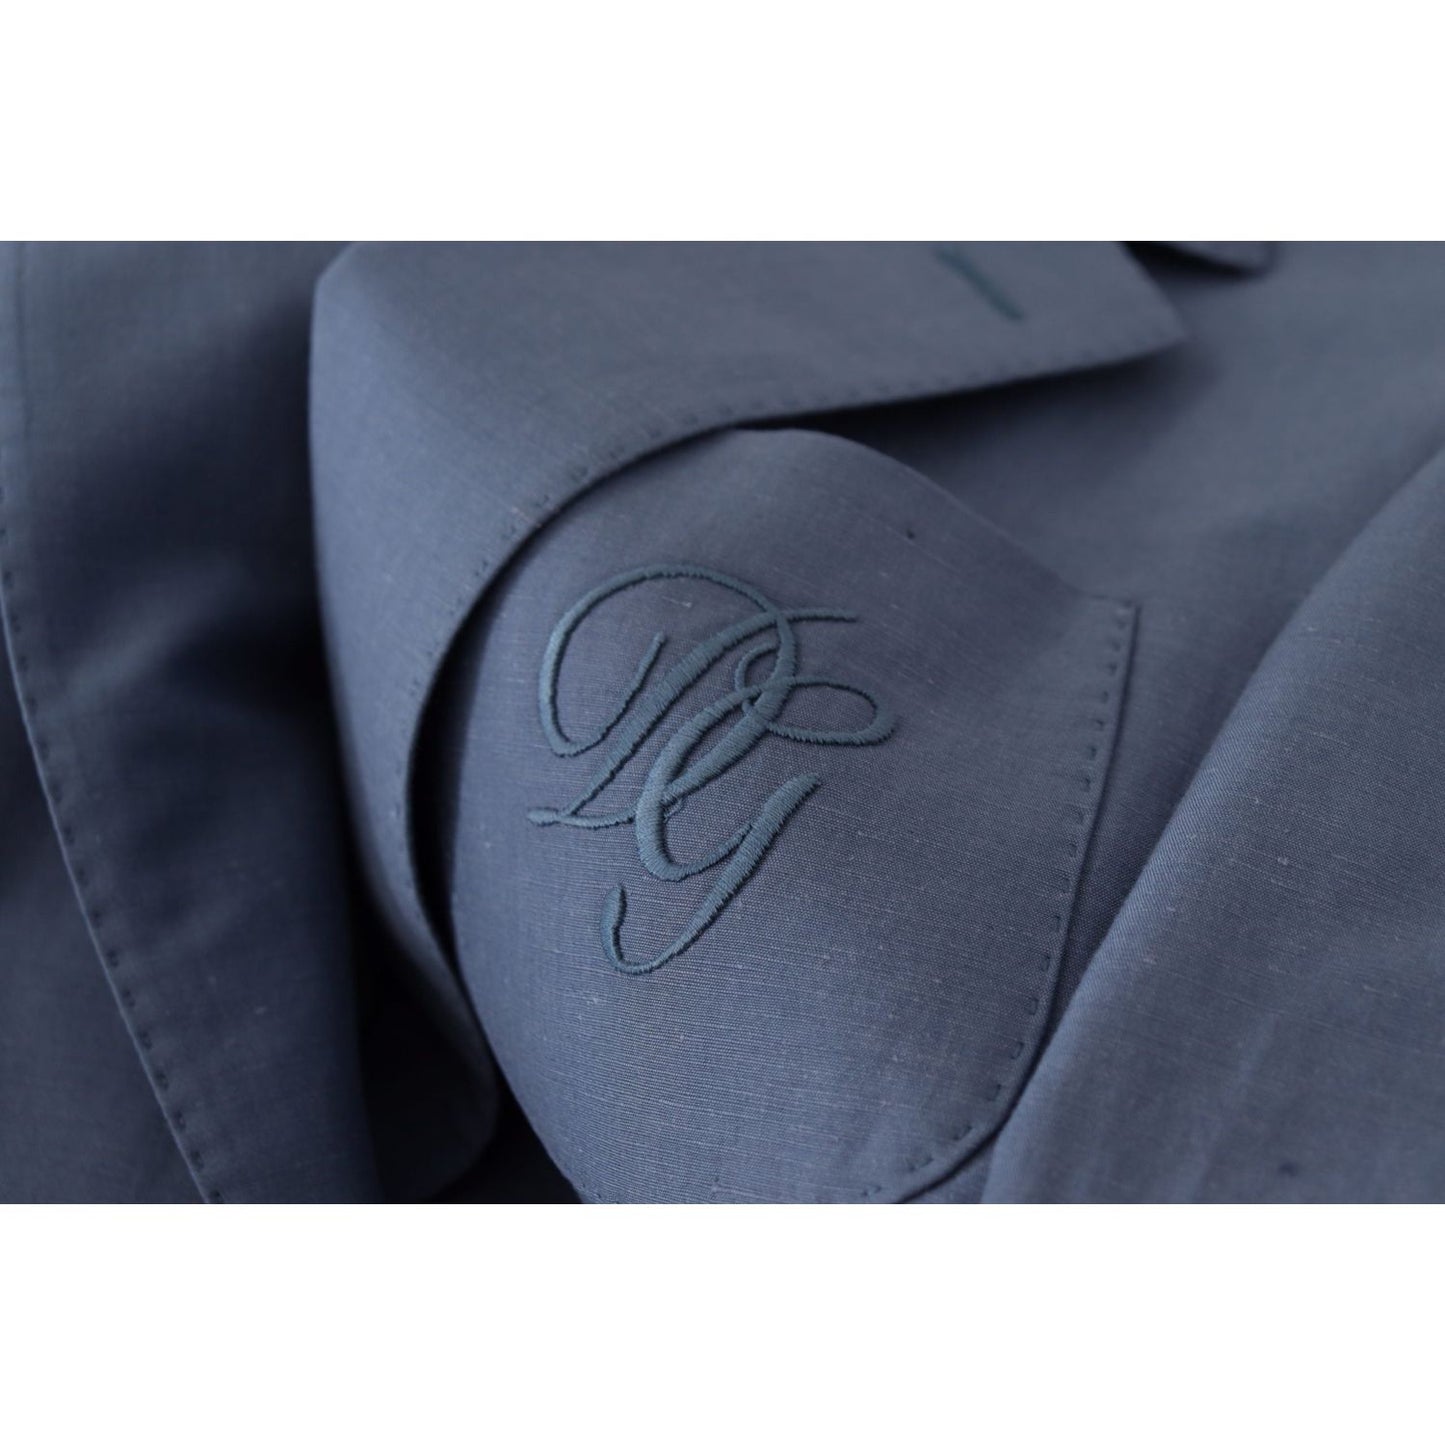 Dolce & Gabbana Elegant Single Breasted Linen Jacket blue-single-breasted-logo-blazer-jacket